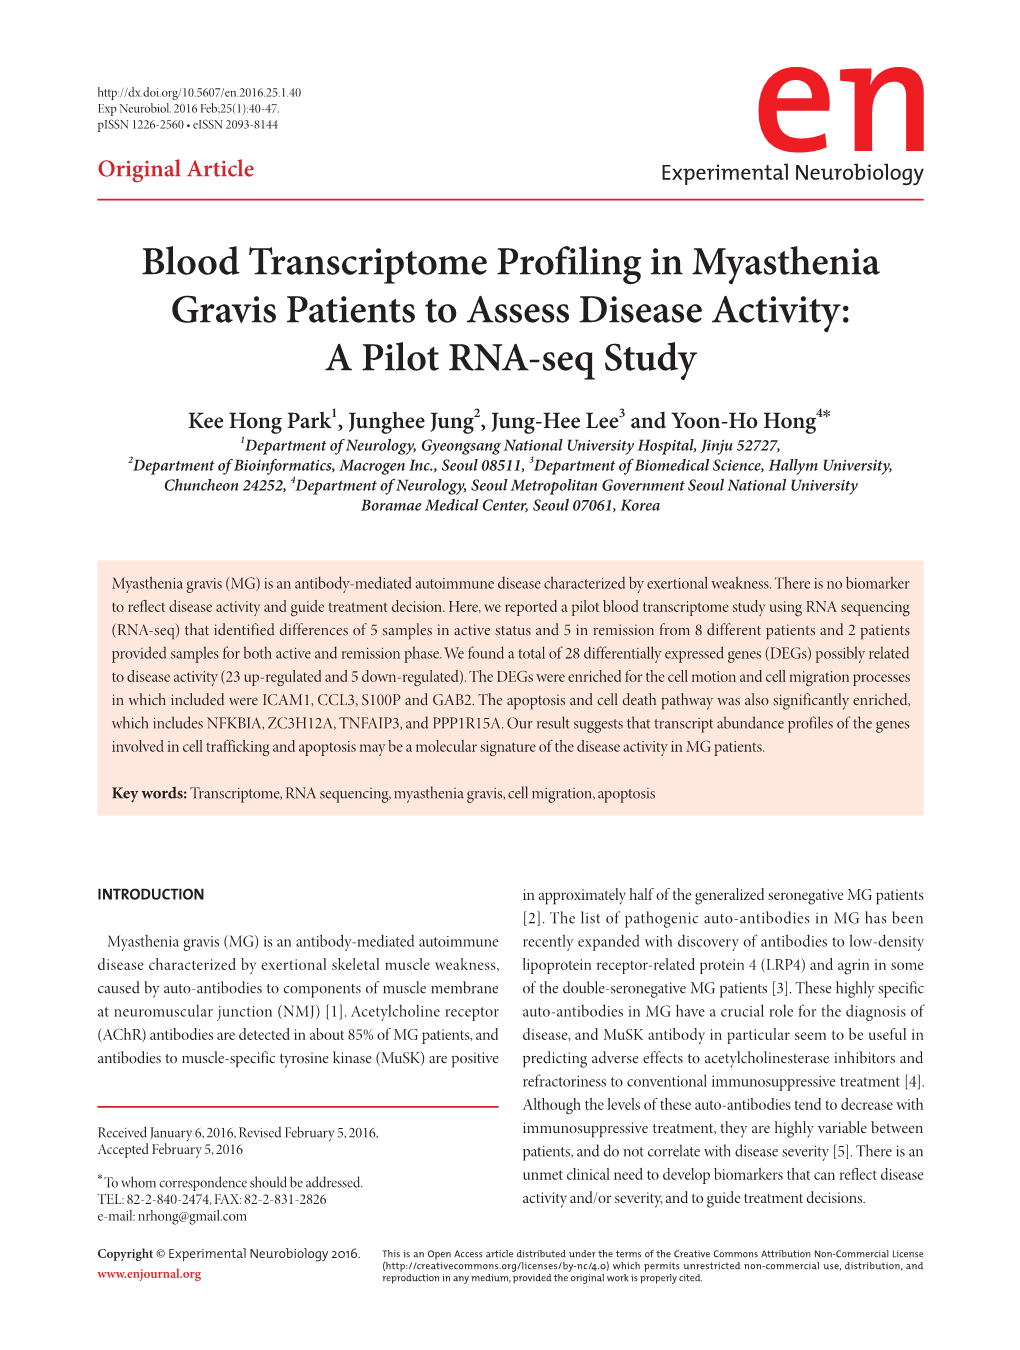 Blood Transcriptome Profiling in Myasthenia Gravis Patients to Assess Disease Activity: a Pilot RNA-Seq Study